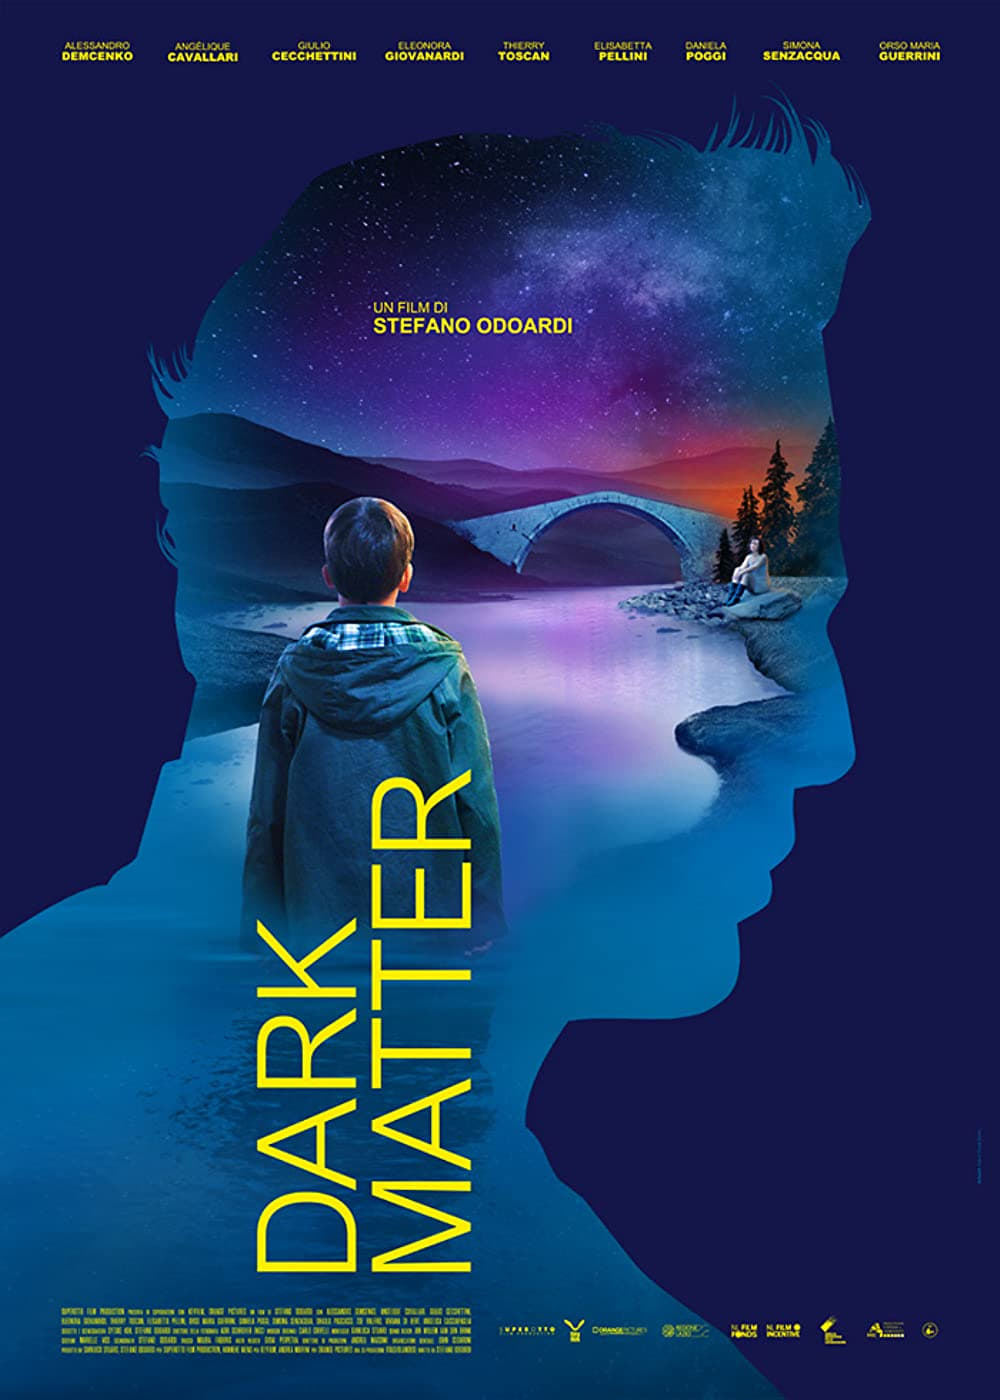 Poster for the movie "Dark Matter"